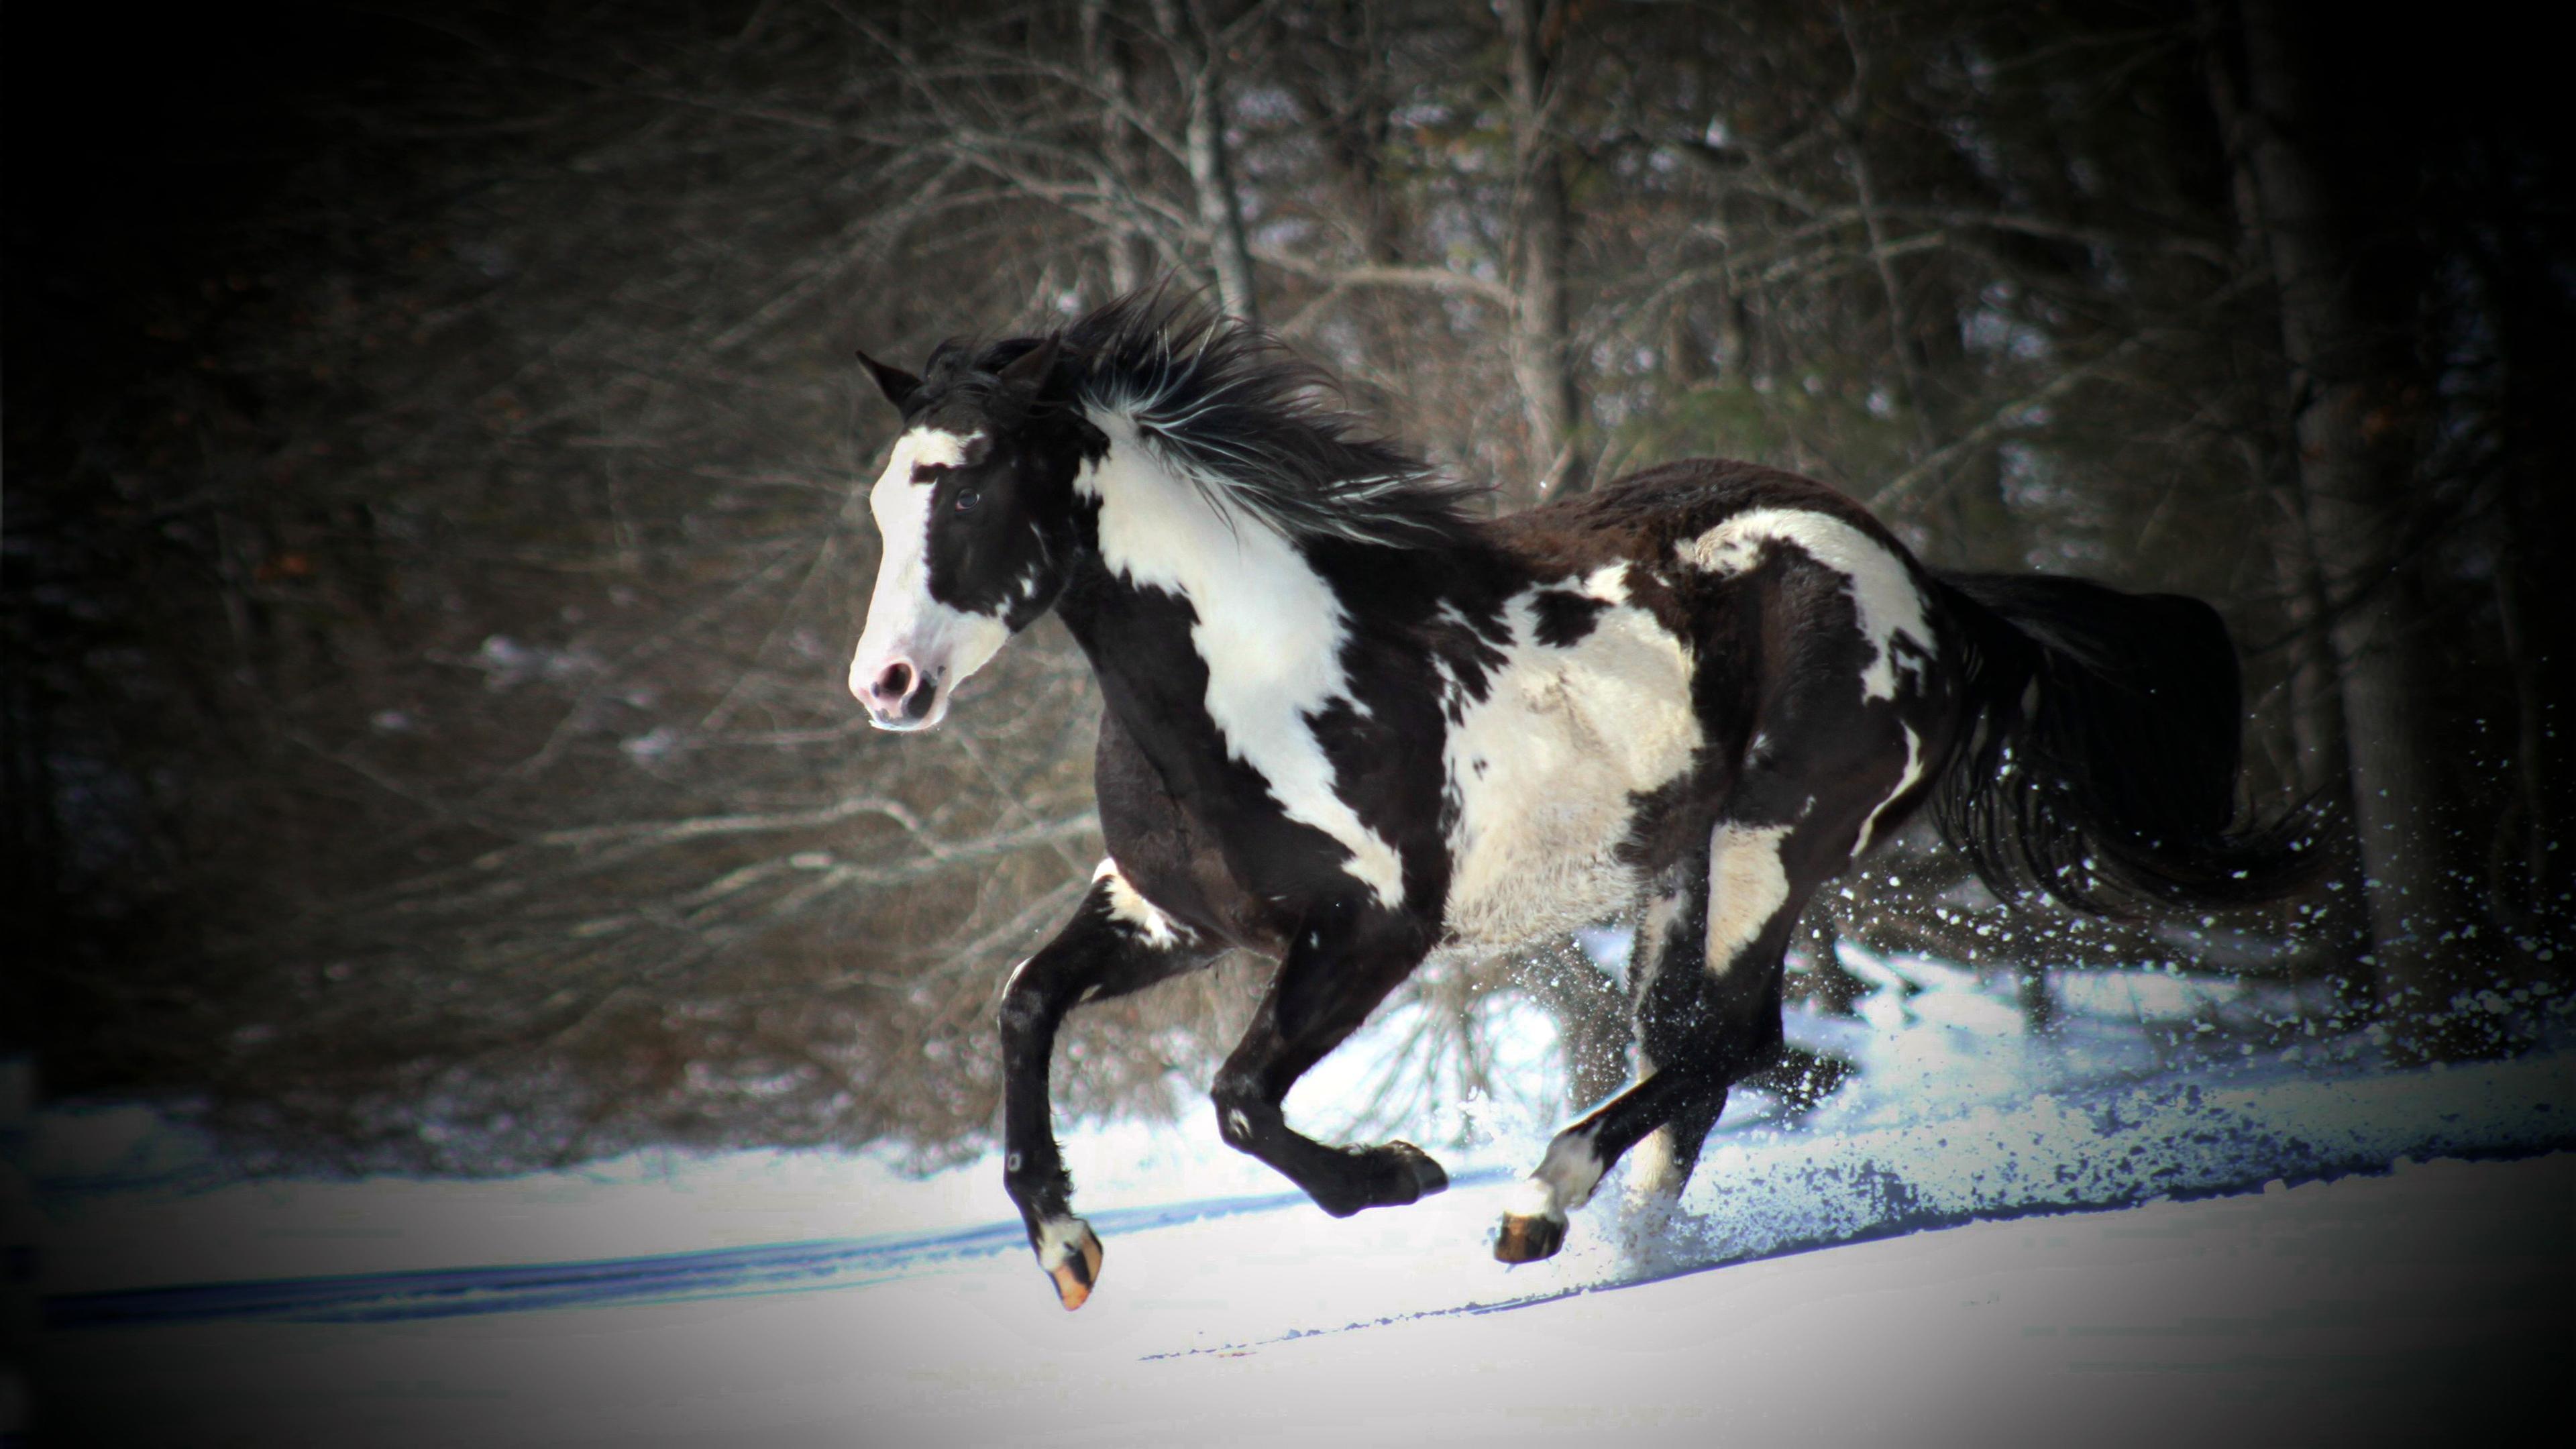 Black And White Horse Running In Snow Desktop Wallpaper Background